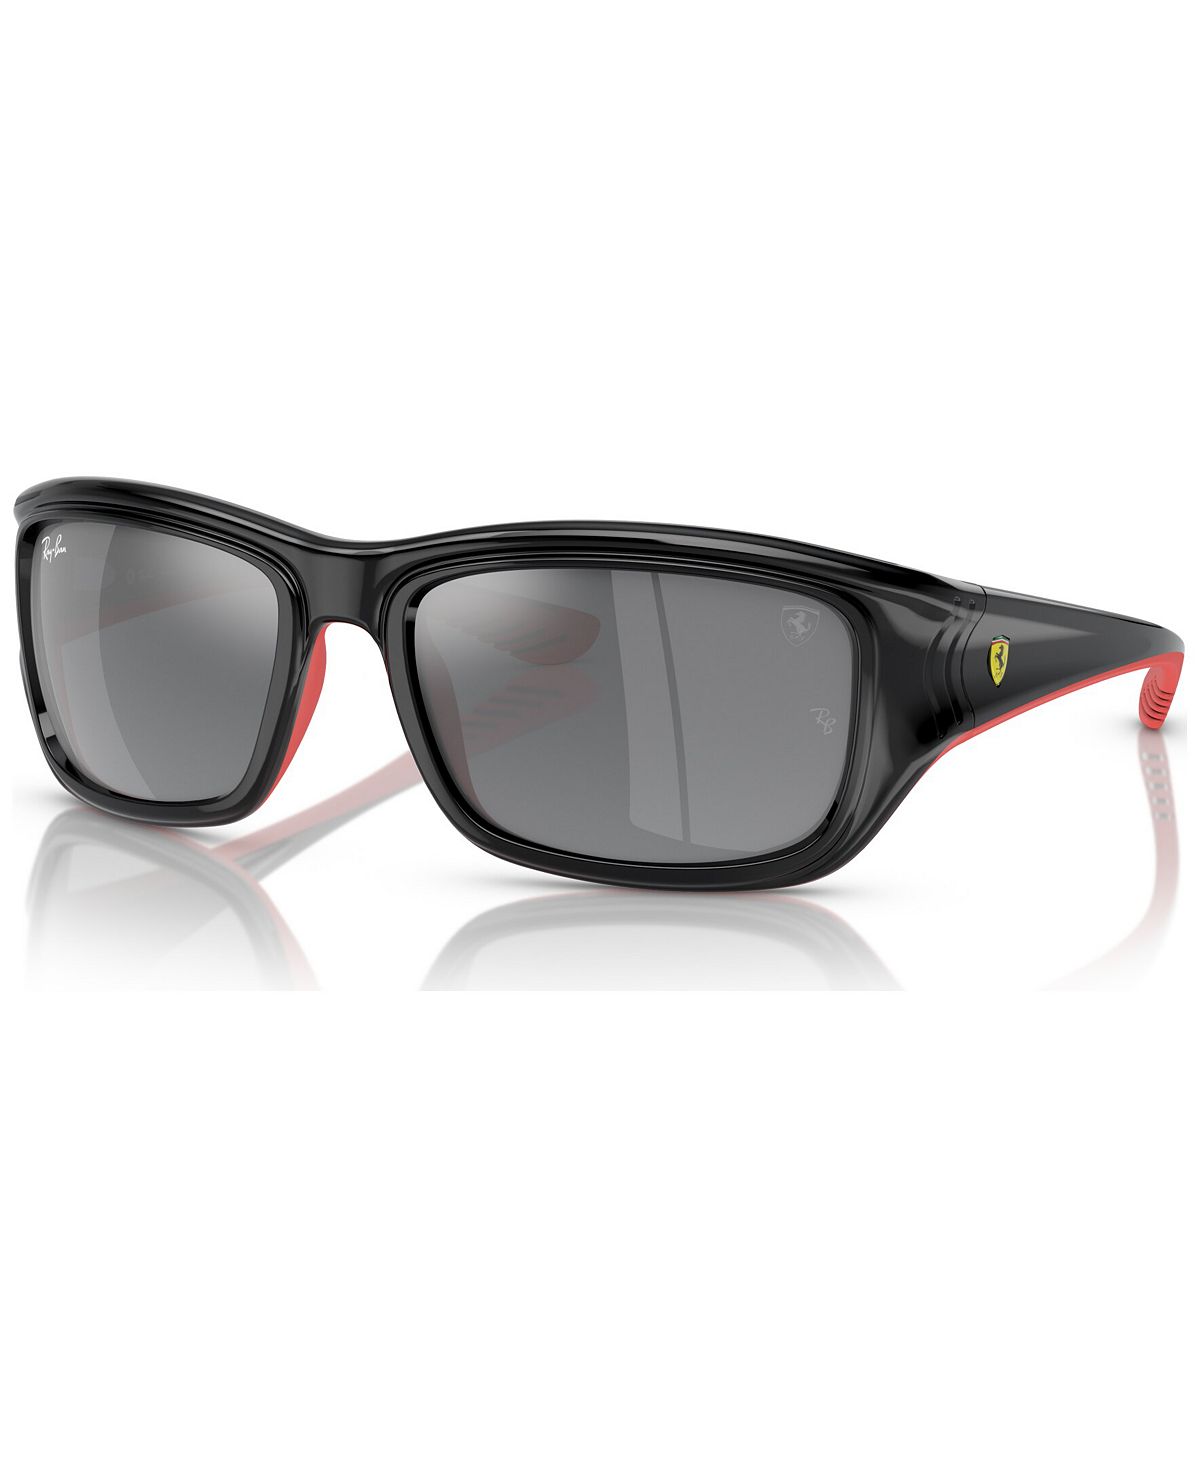 Мужские солнцезащитные очки, RB4405M Коллекция Scuderia Ferrari Ray-Ban red on red